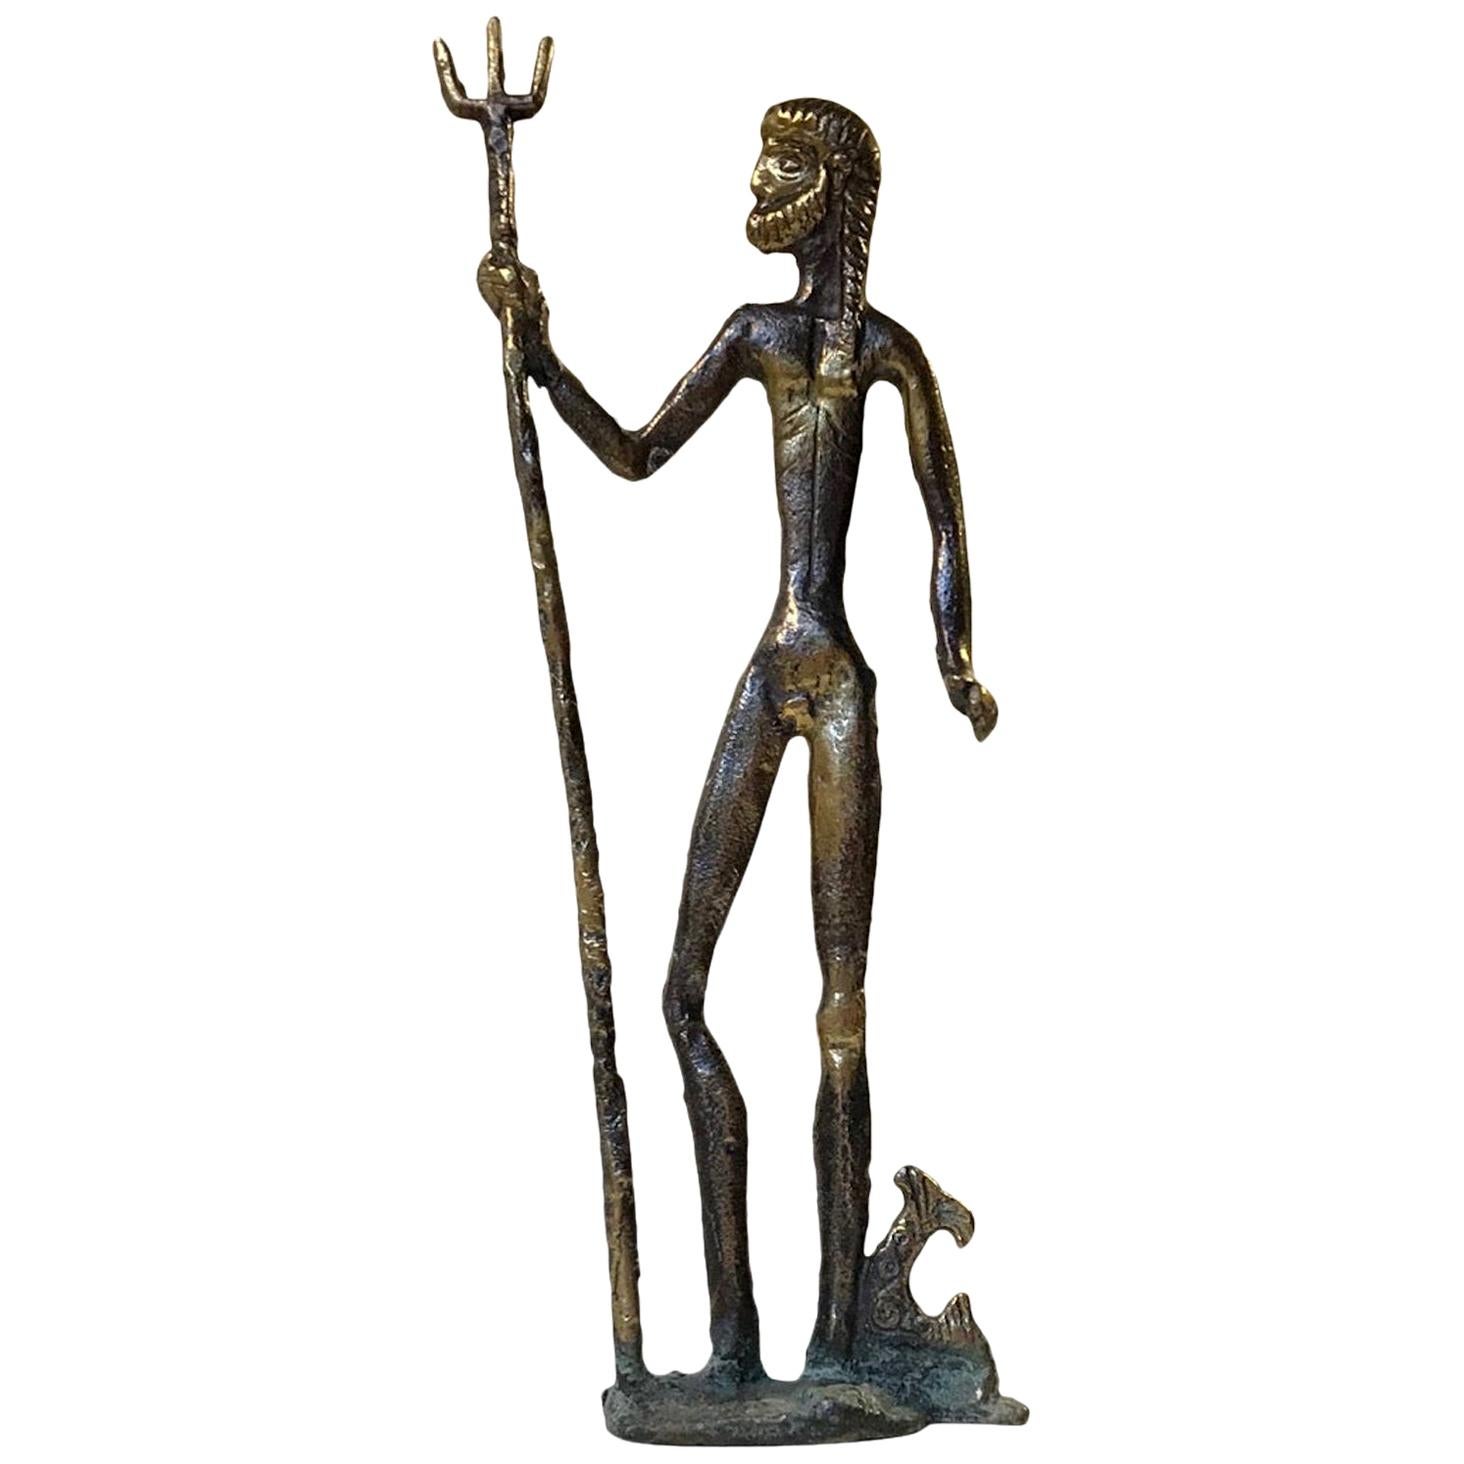 Naiv-Bronze-Skulptur eines Poseidon, mythologischer Meeresgott, im Vintage-Stil